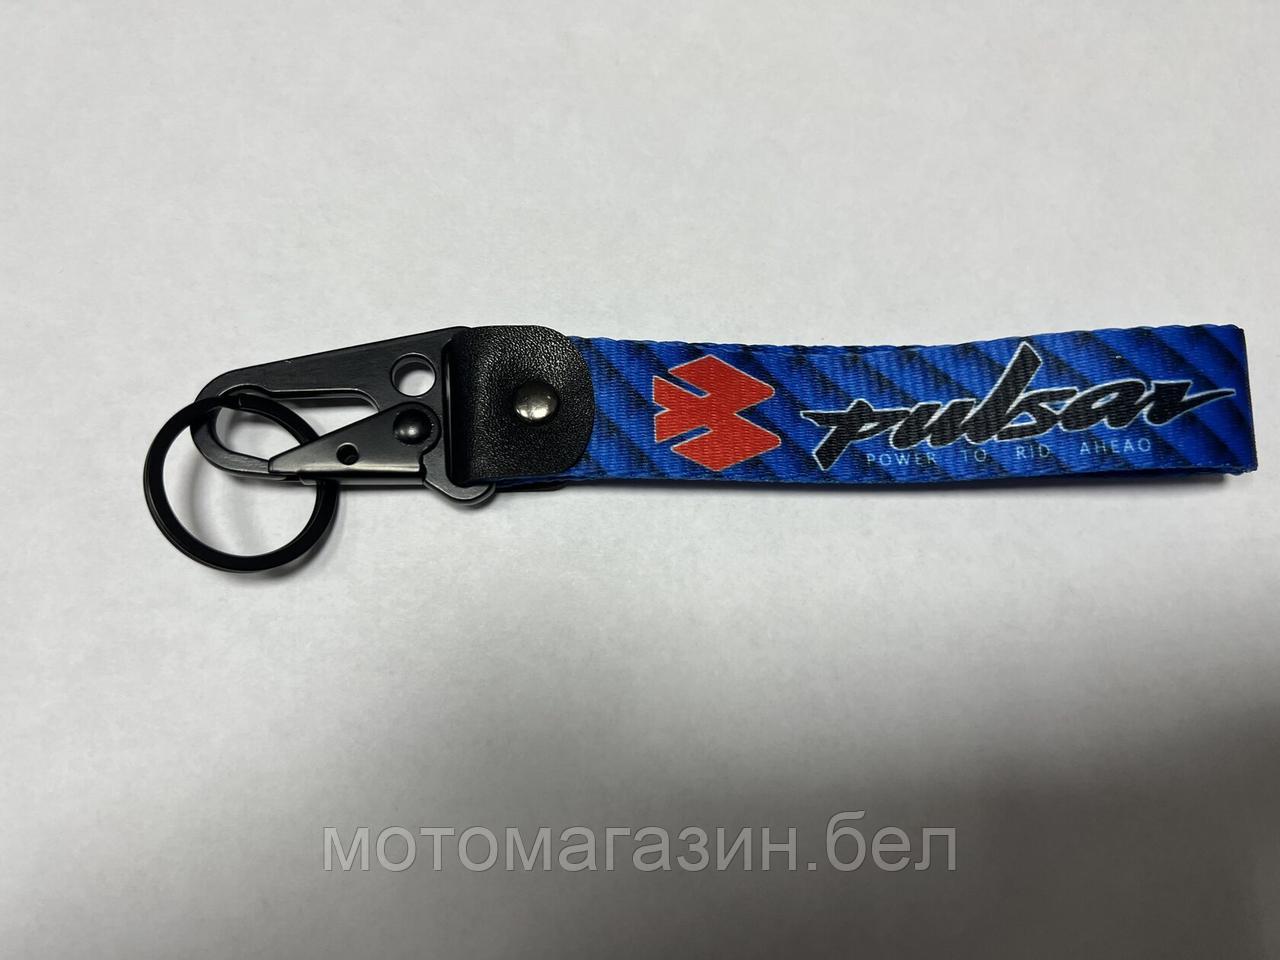 Шнурок для ключей 150mm, железный карабин #7 (Pulsar blue)